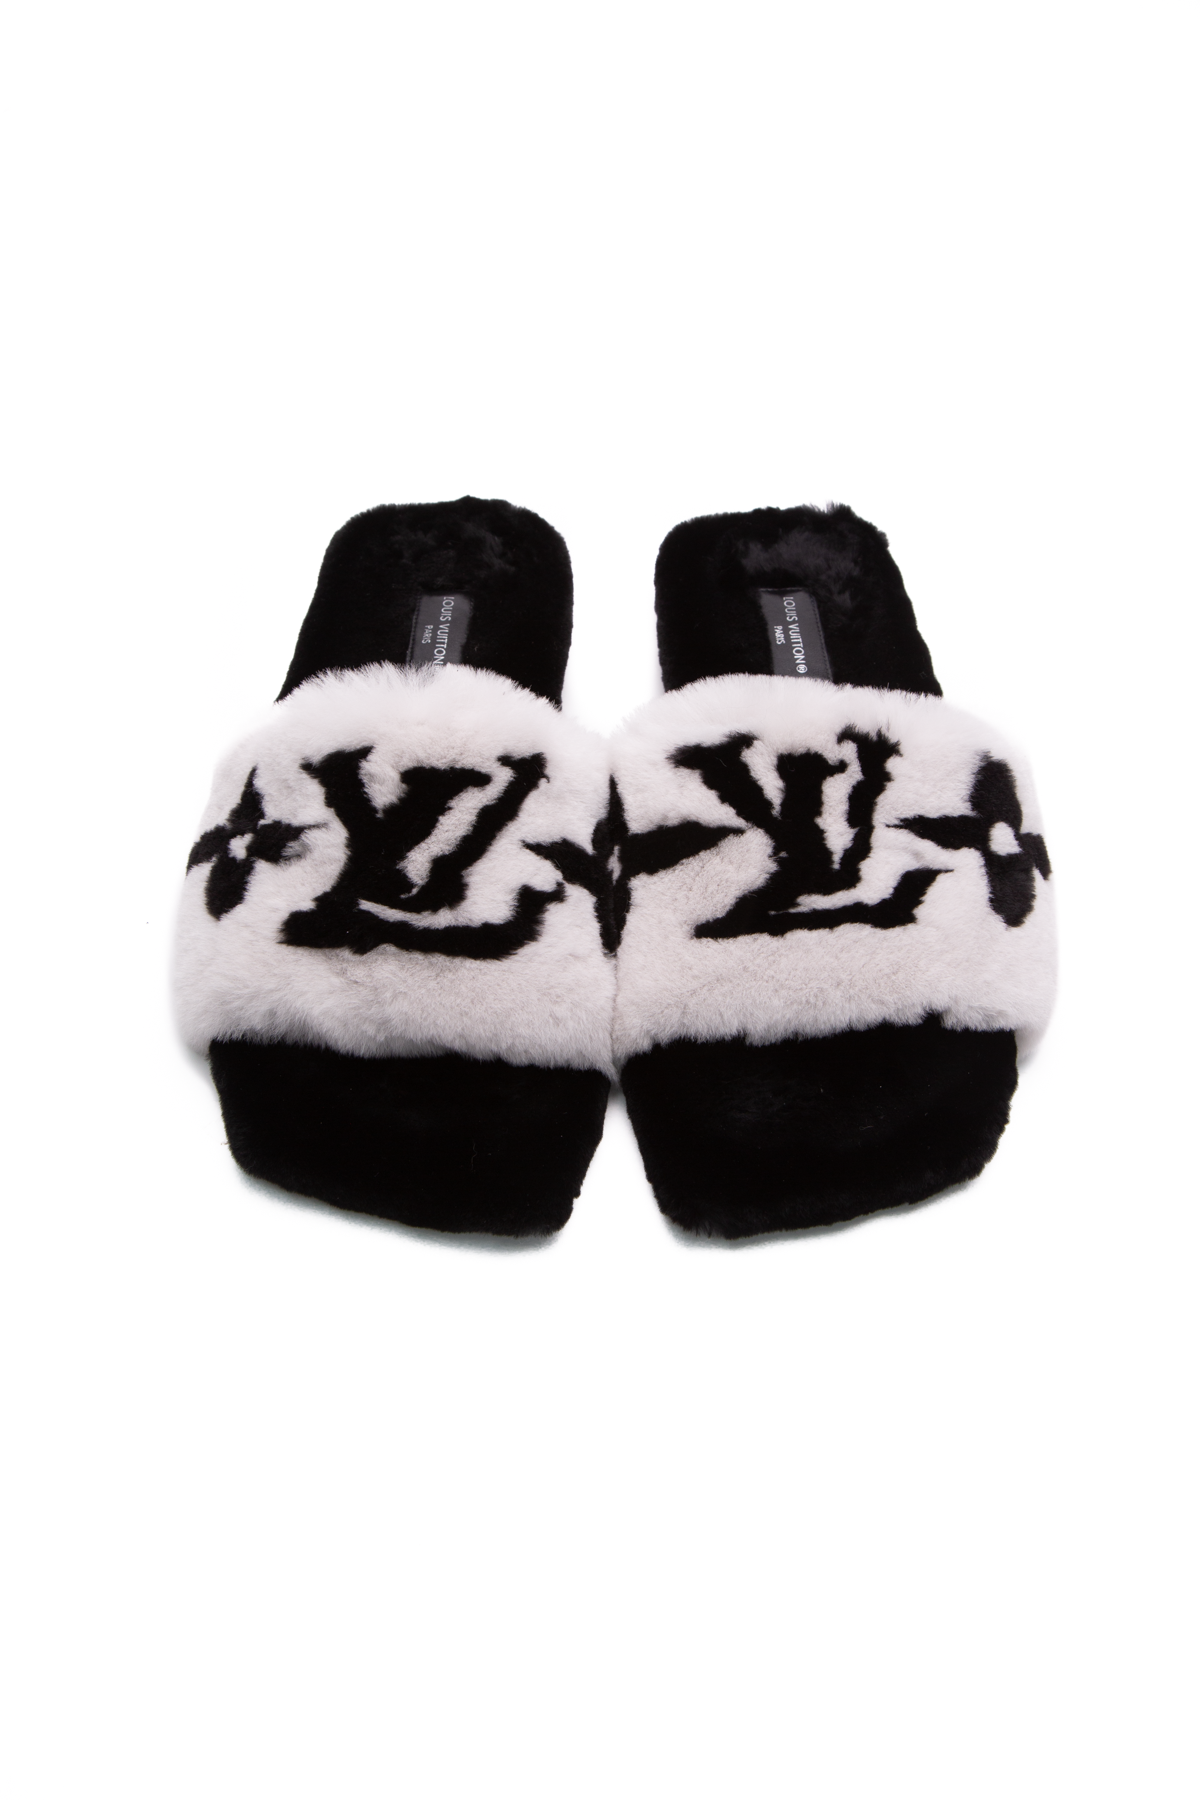 Louis Vuitton Mink Fay Flat Mule Sandals - Size 41 - Couture USA